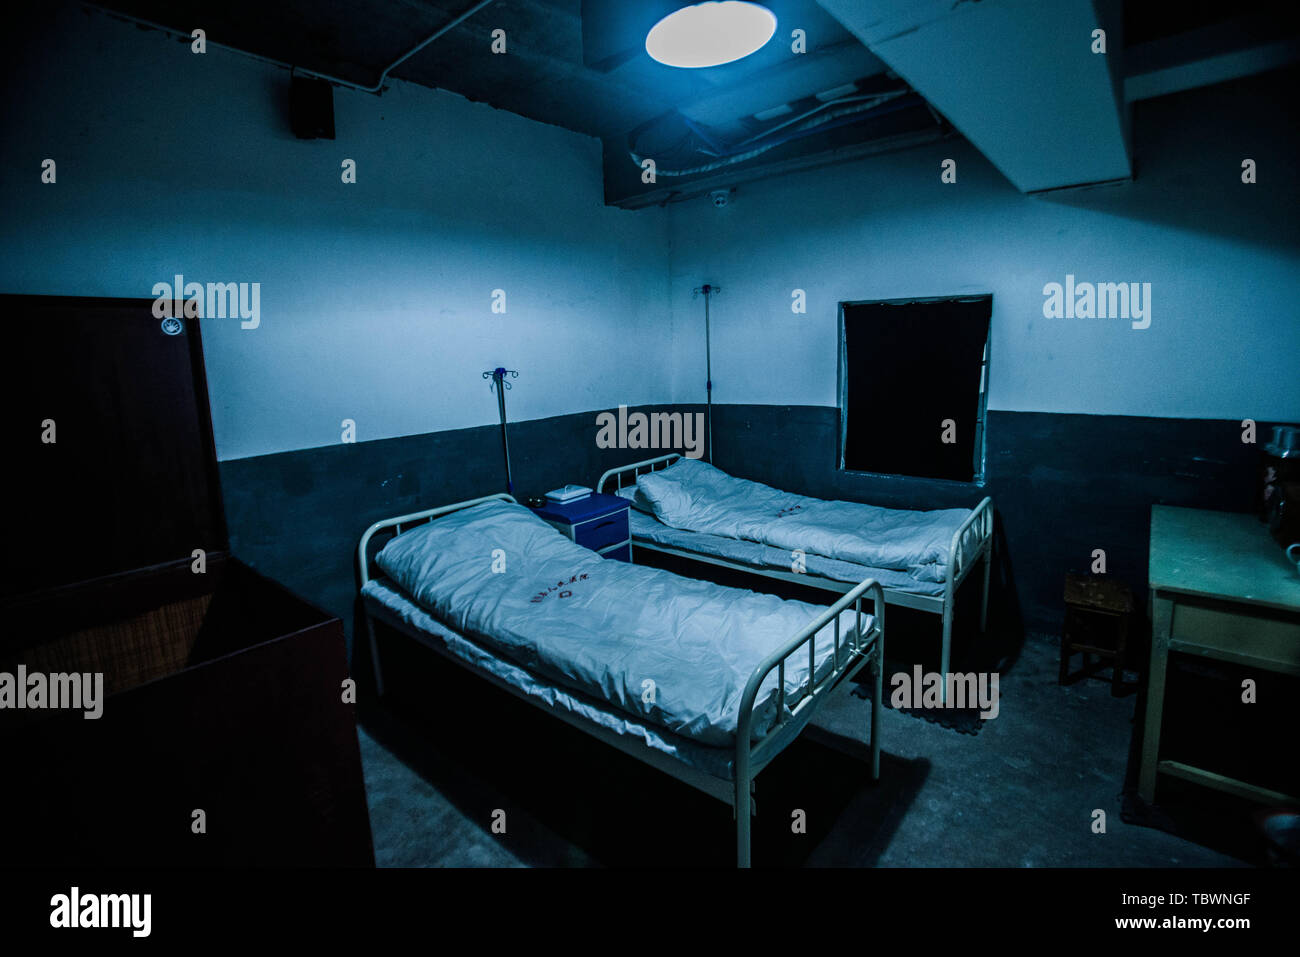 Horror Haunted House Hospital Themed Secret Room Escape